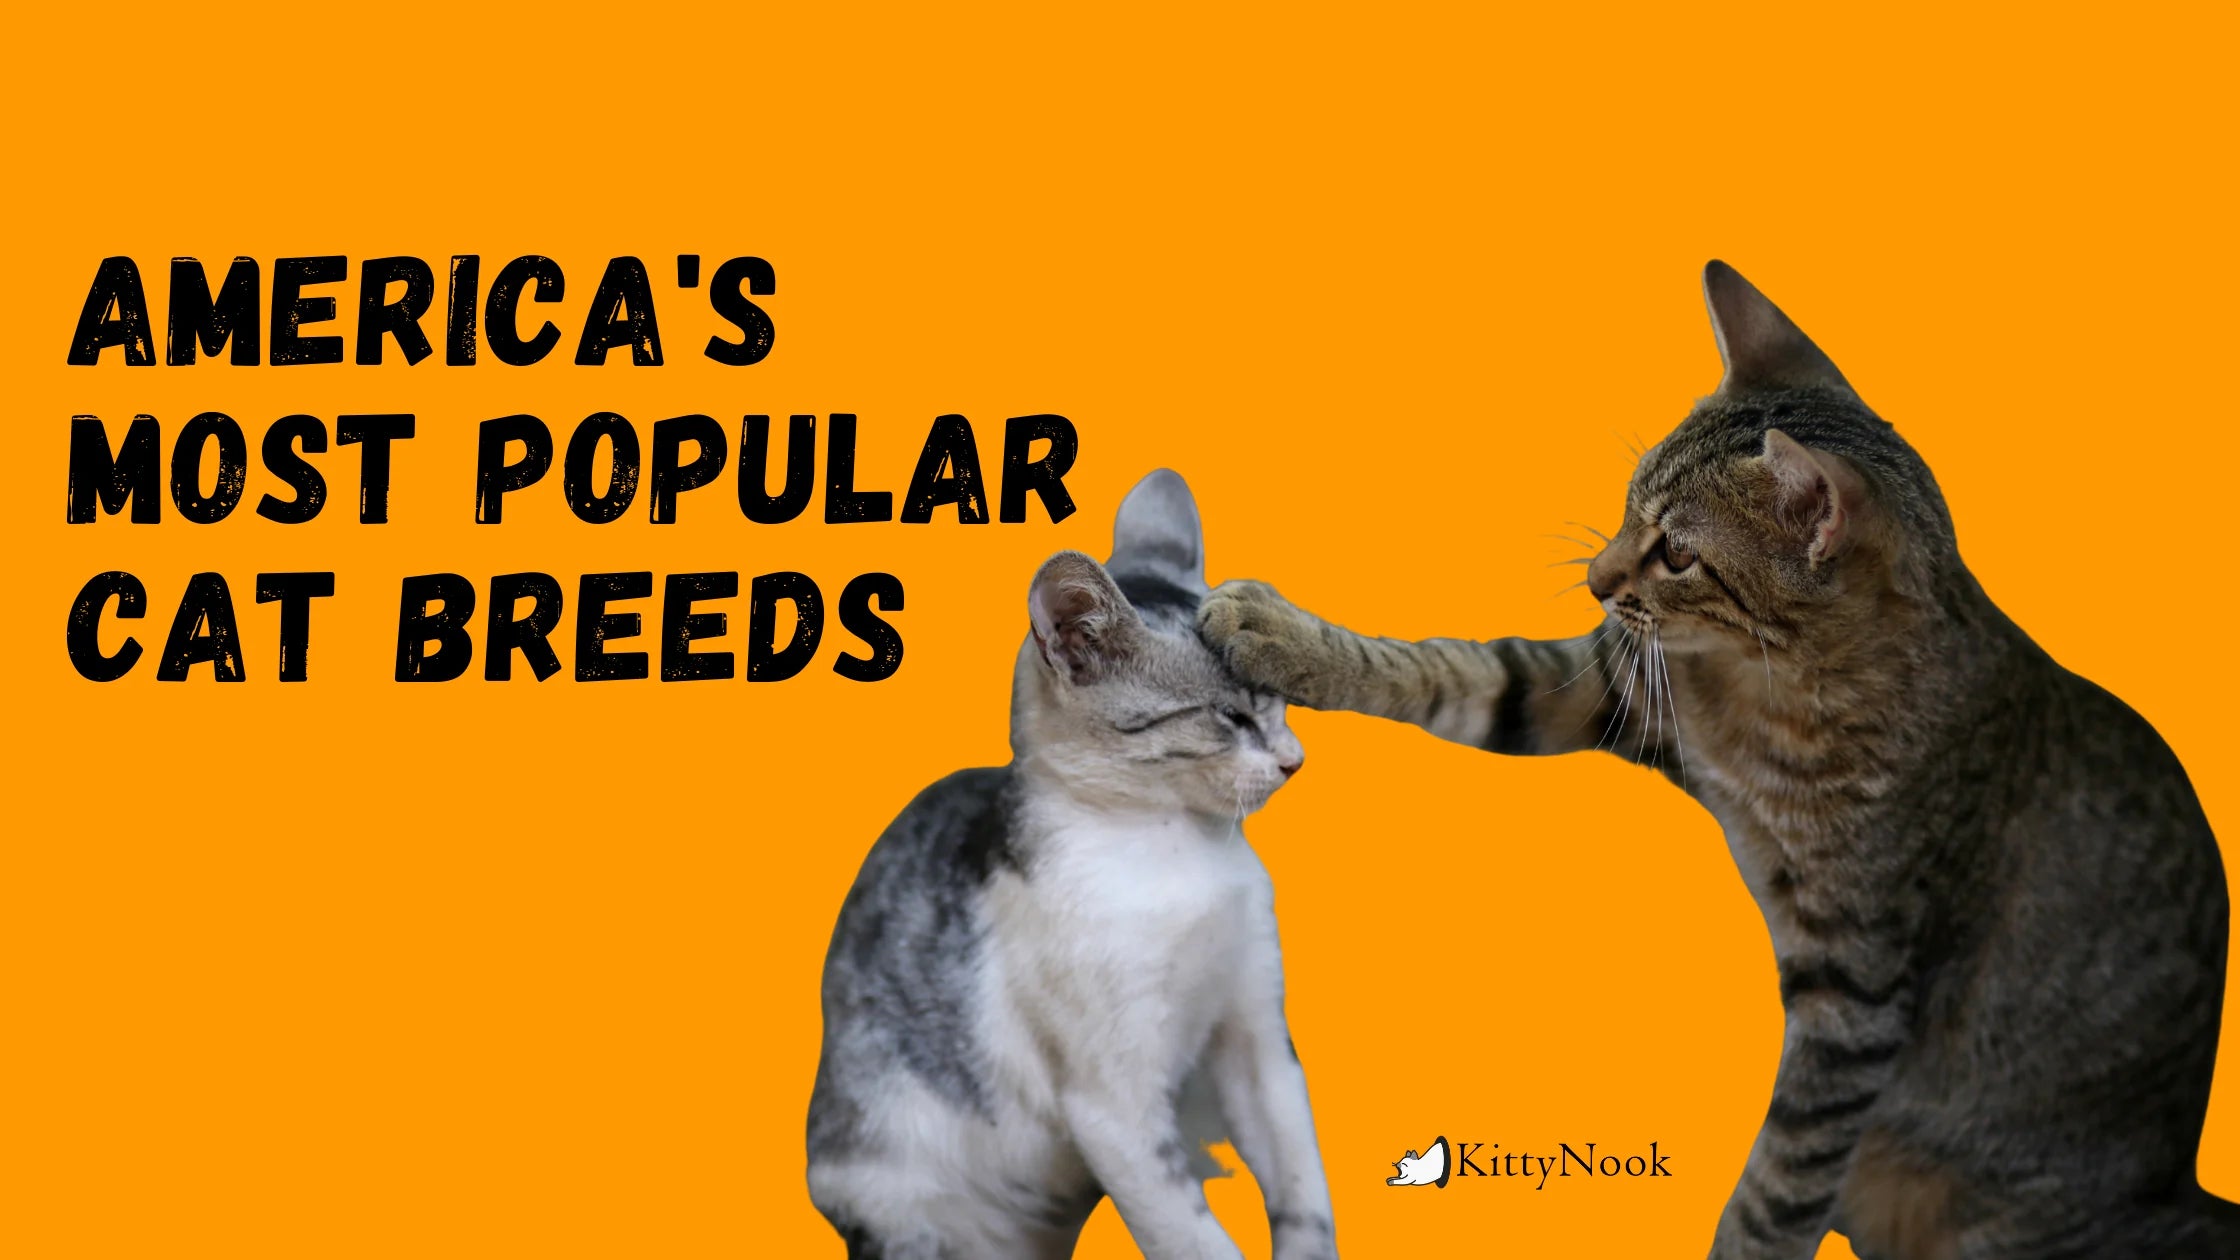 America's Most Popular Cat Breeds - KittyNook Cat Company